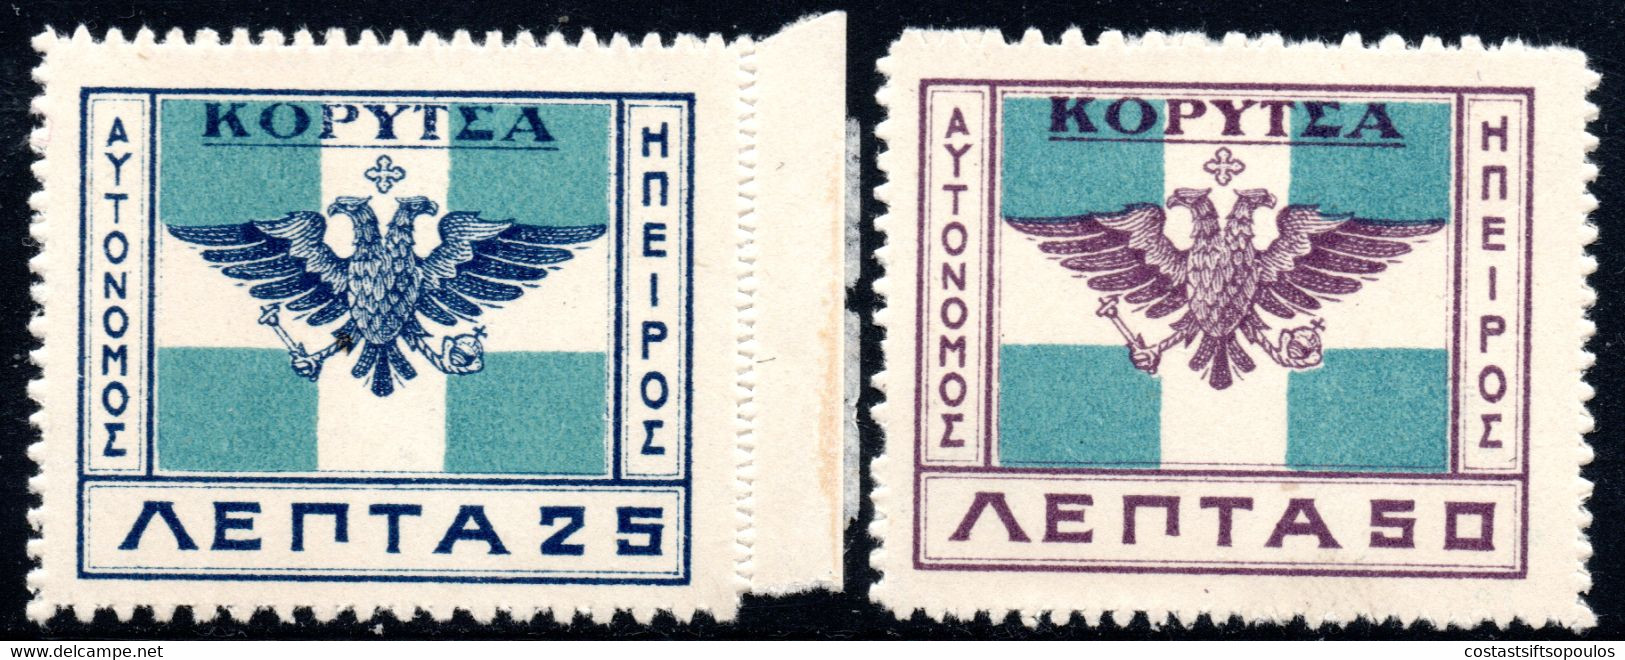 377.GREECE.ALBANIA,N.EPIRUS.1914 KORYTSA ISSUE,HELLAS 94 BH.B PERF.10 1/2  AT BOTTOM,95 AH.T PERF.10 1/2 AT TOP,MNH - Epirus & Albanië